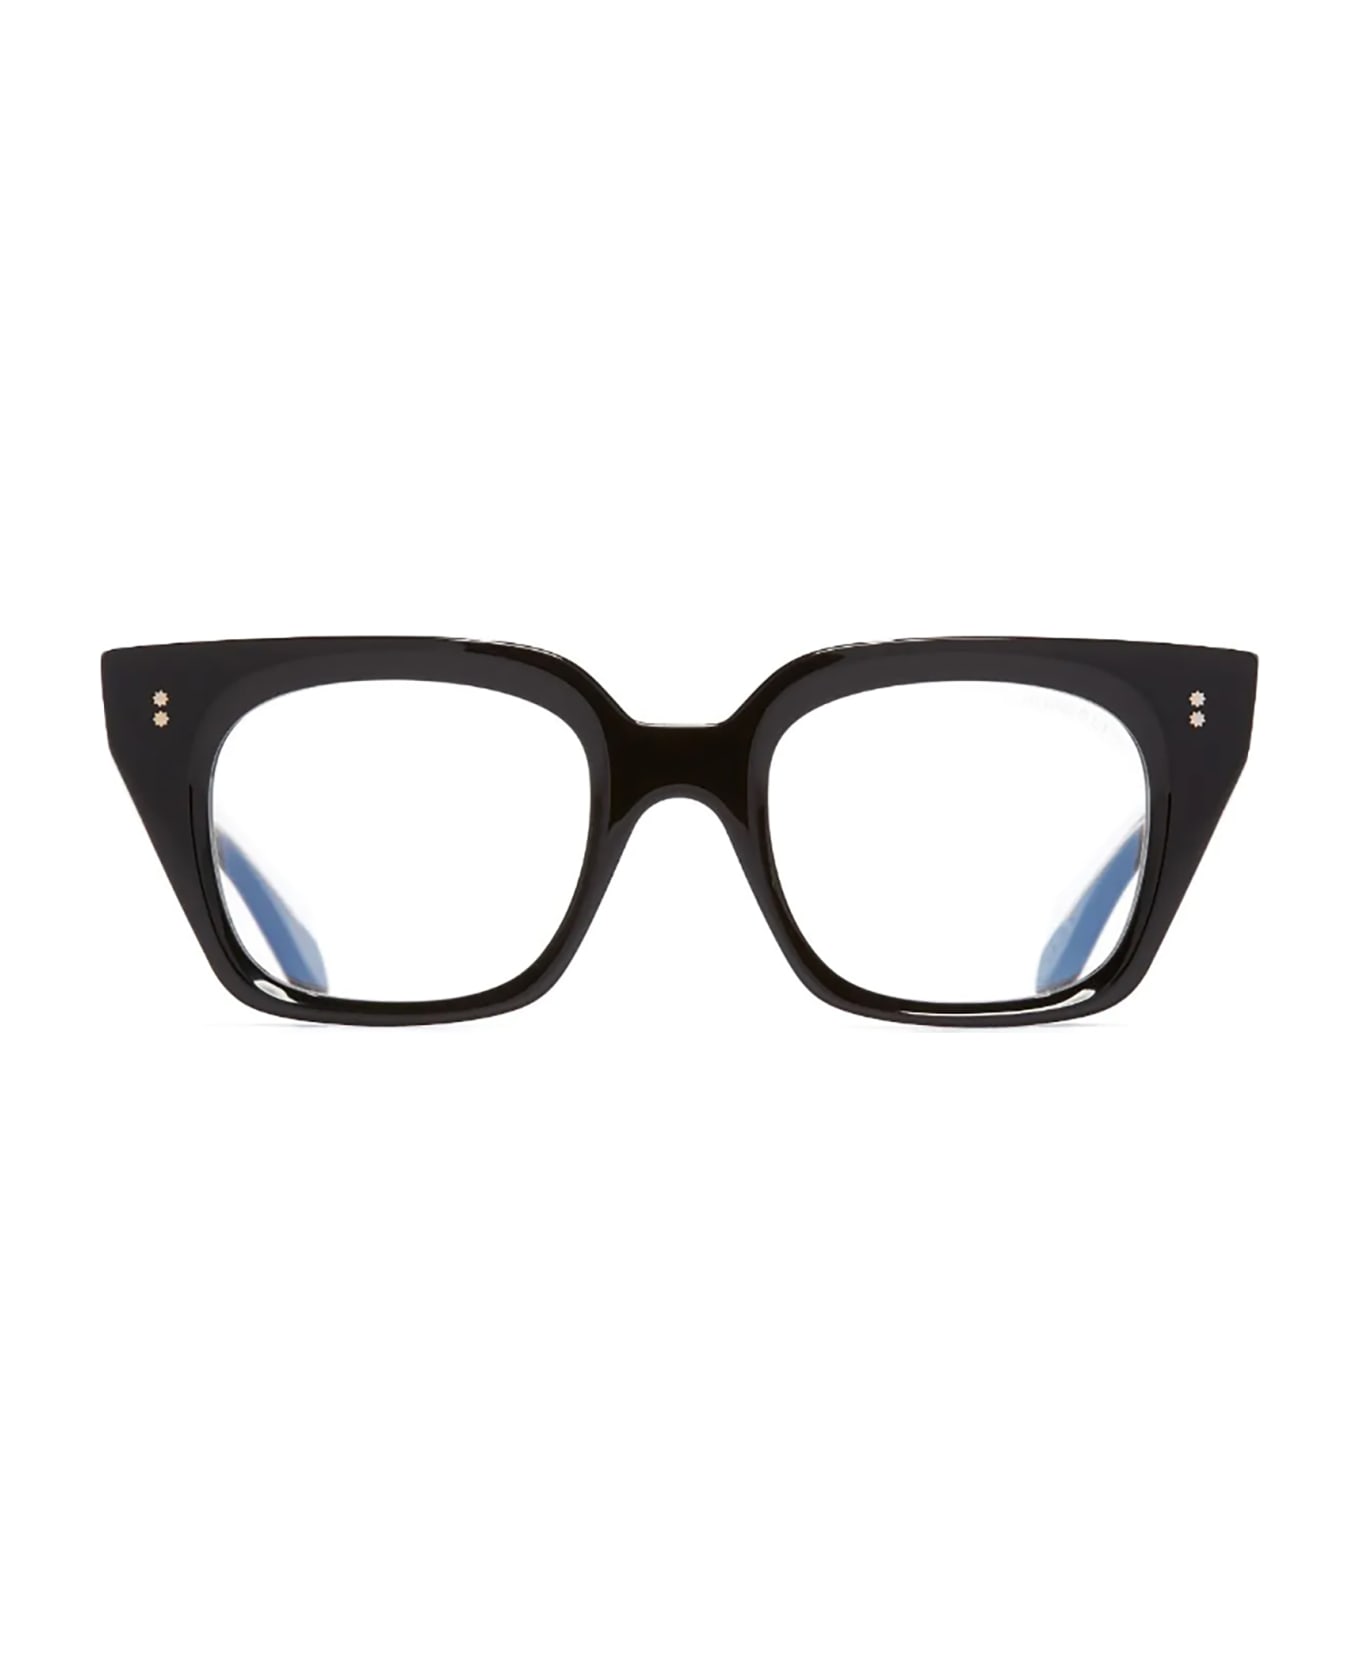 Cutler and Gross 1411 Eyewear - Black